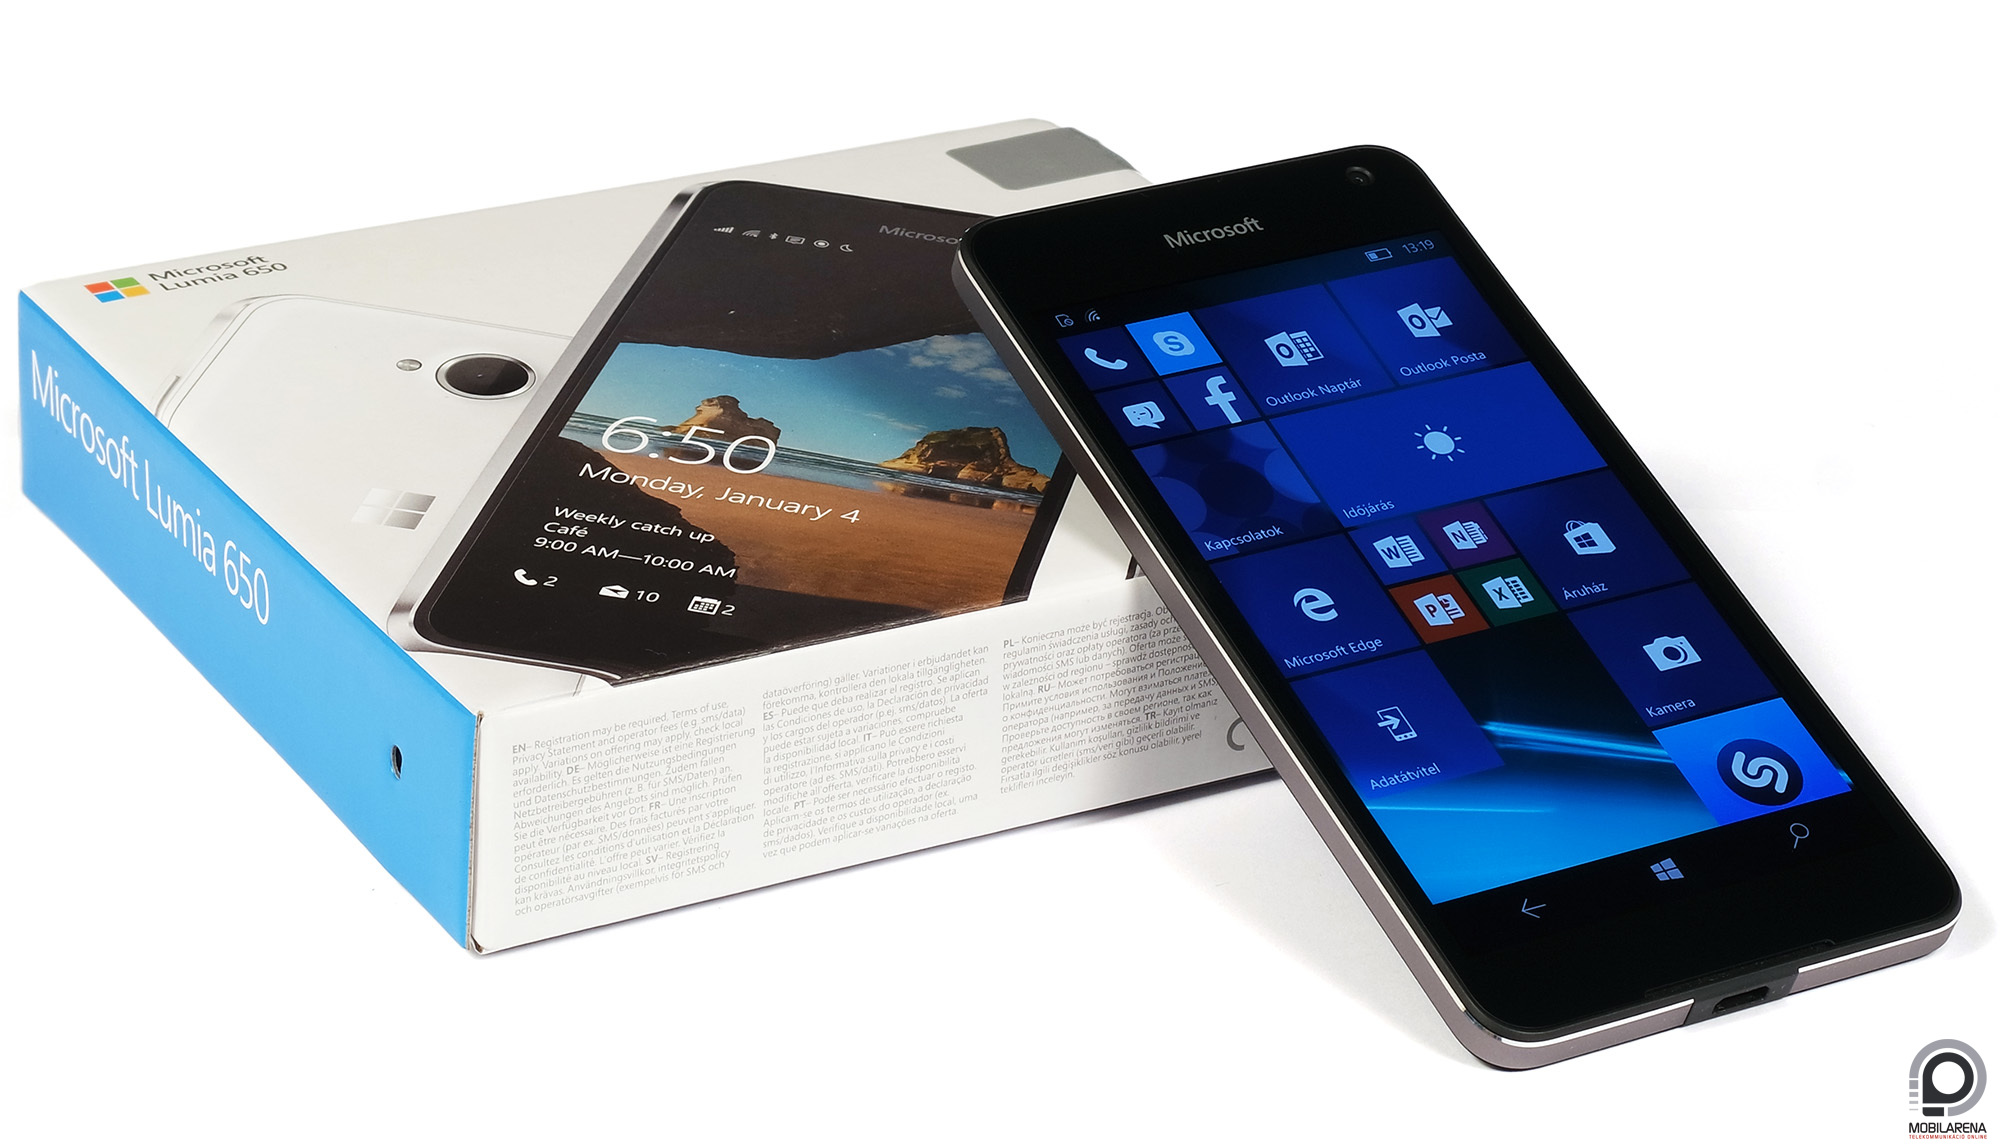 lumia 650 for sale